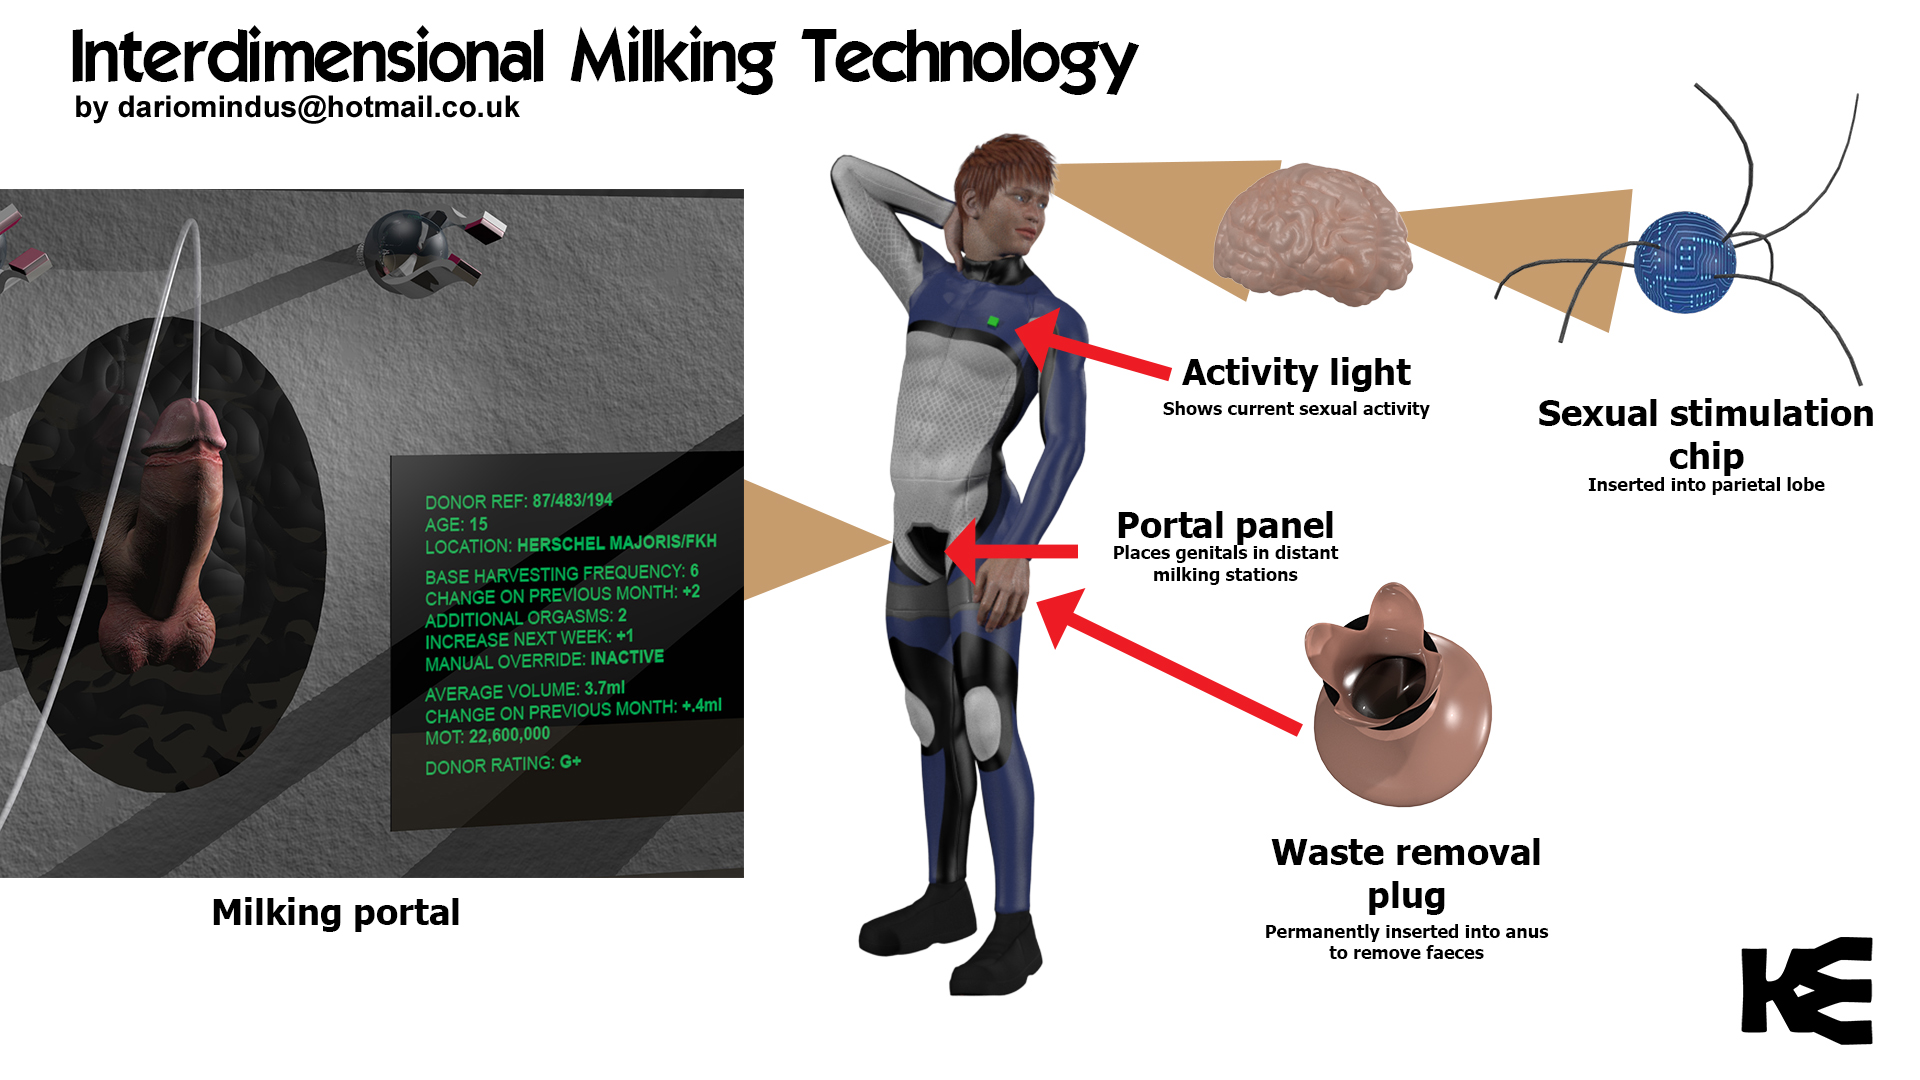 Interdimensional Milking